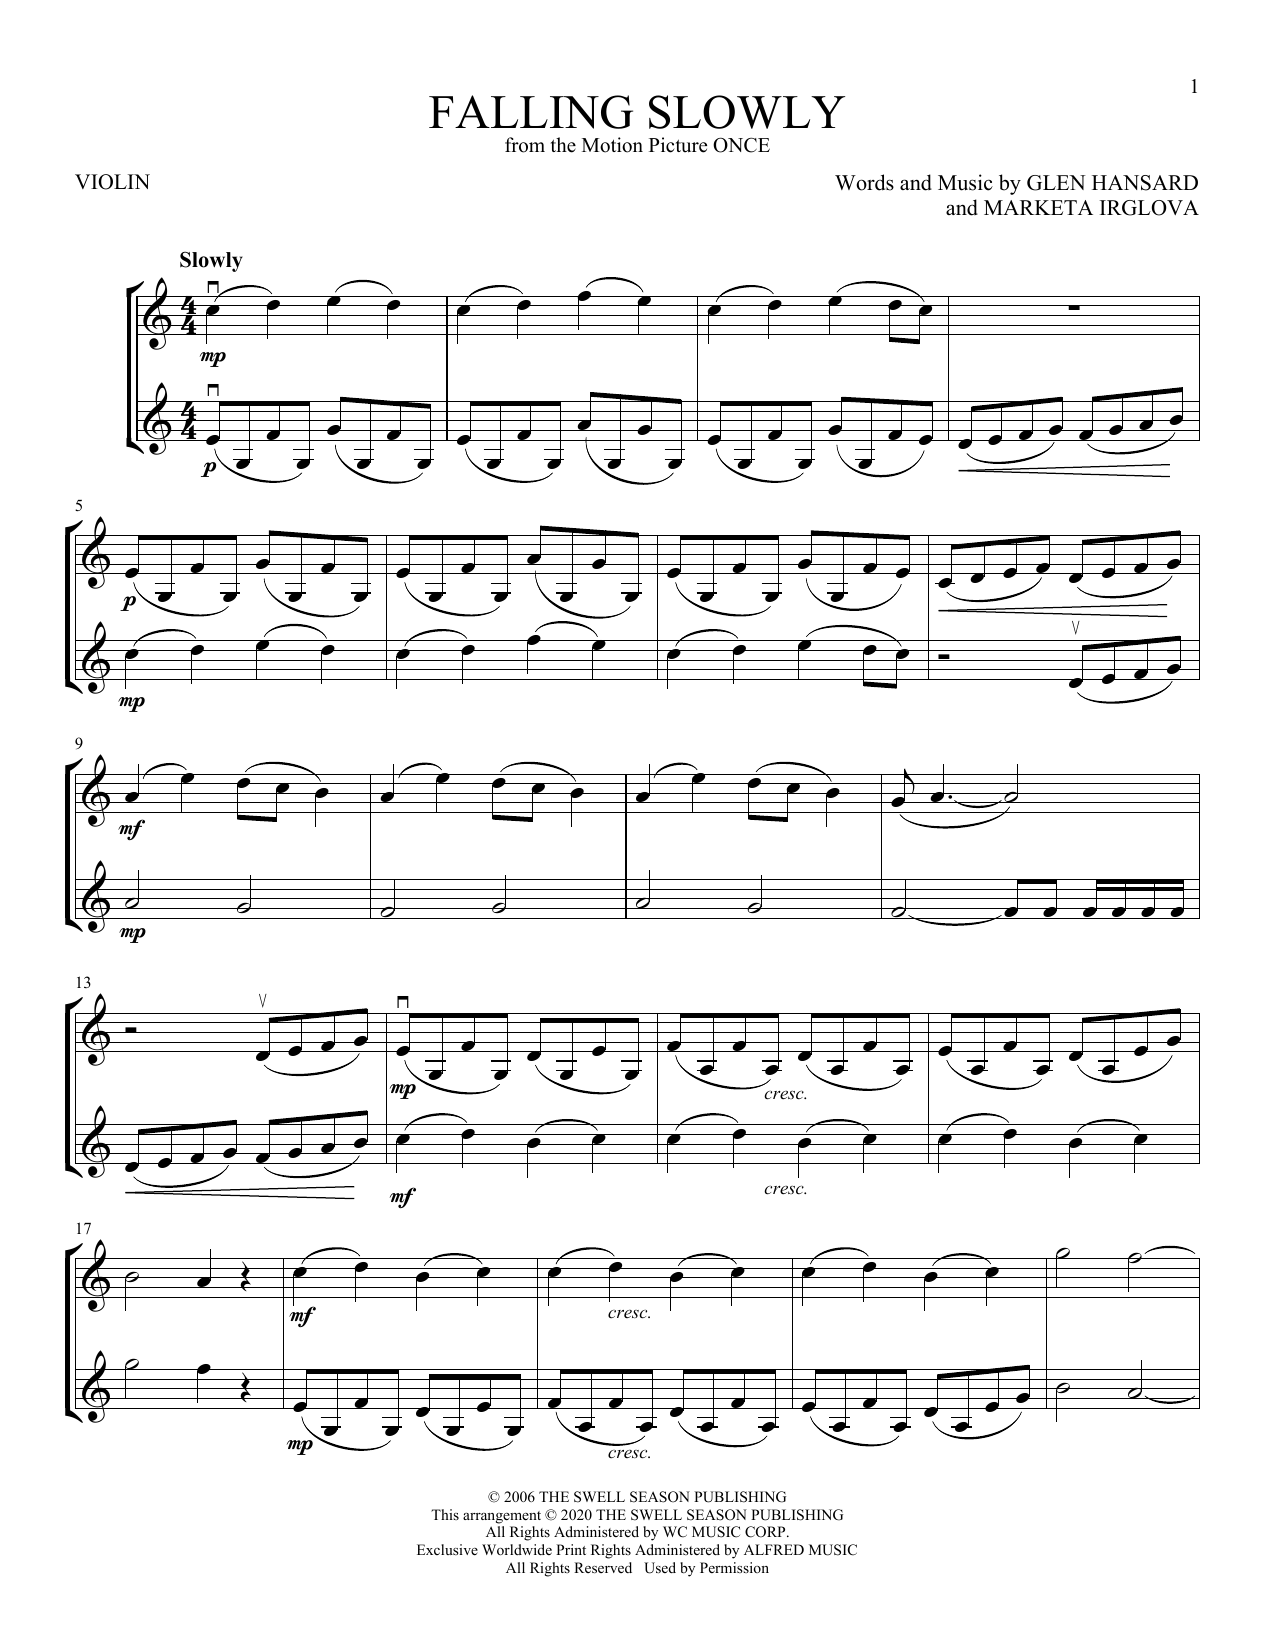 Download Glen Hansard & Marketa Irglova Falling Slowly (from Once) Sheet Music